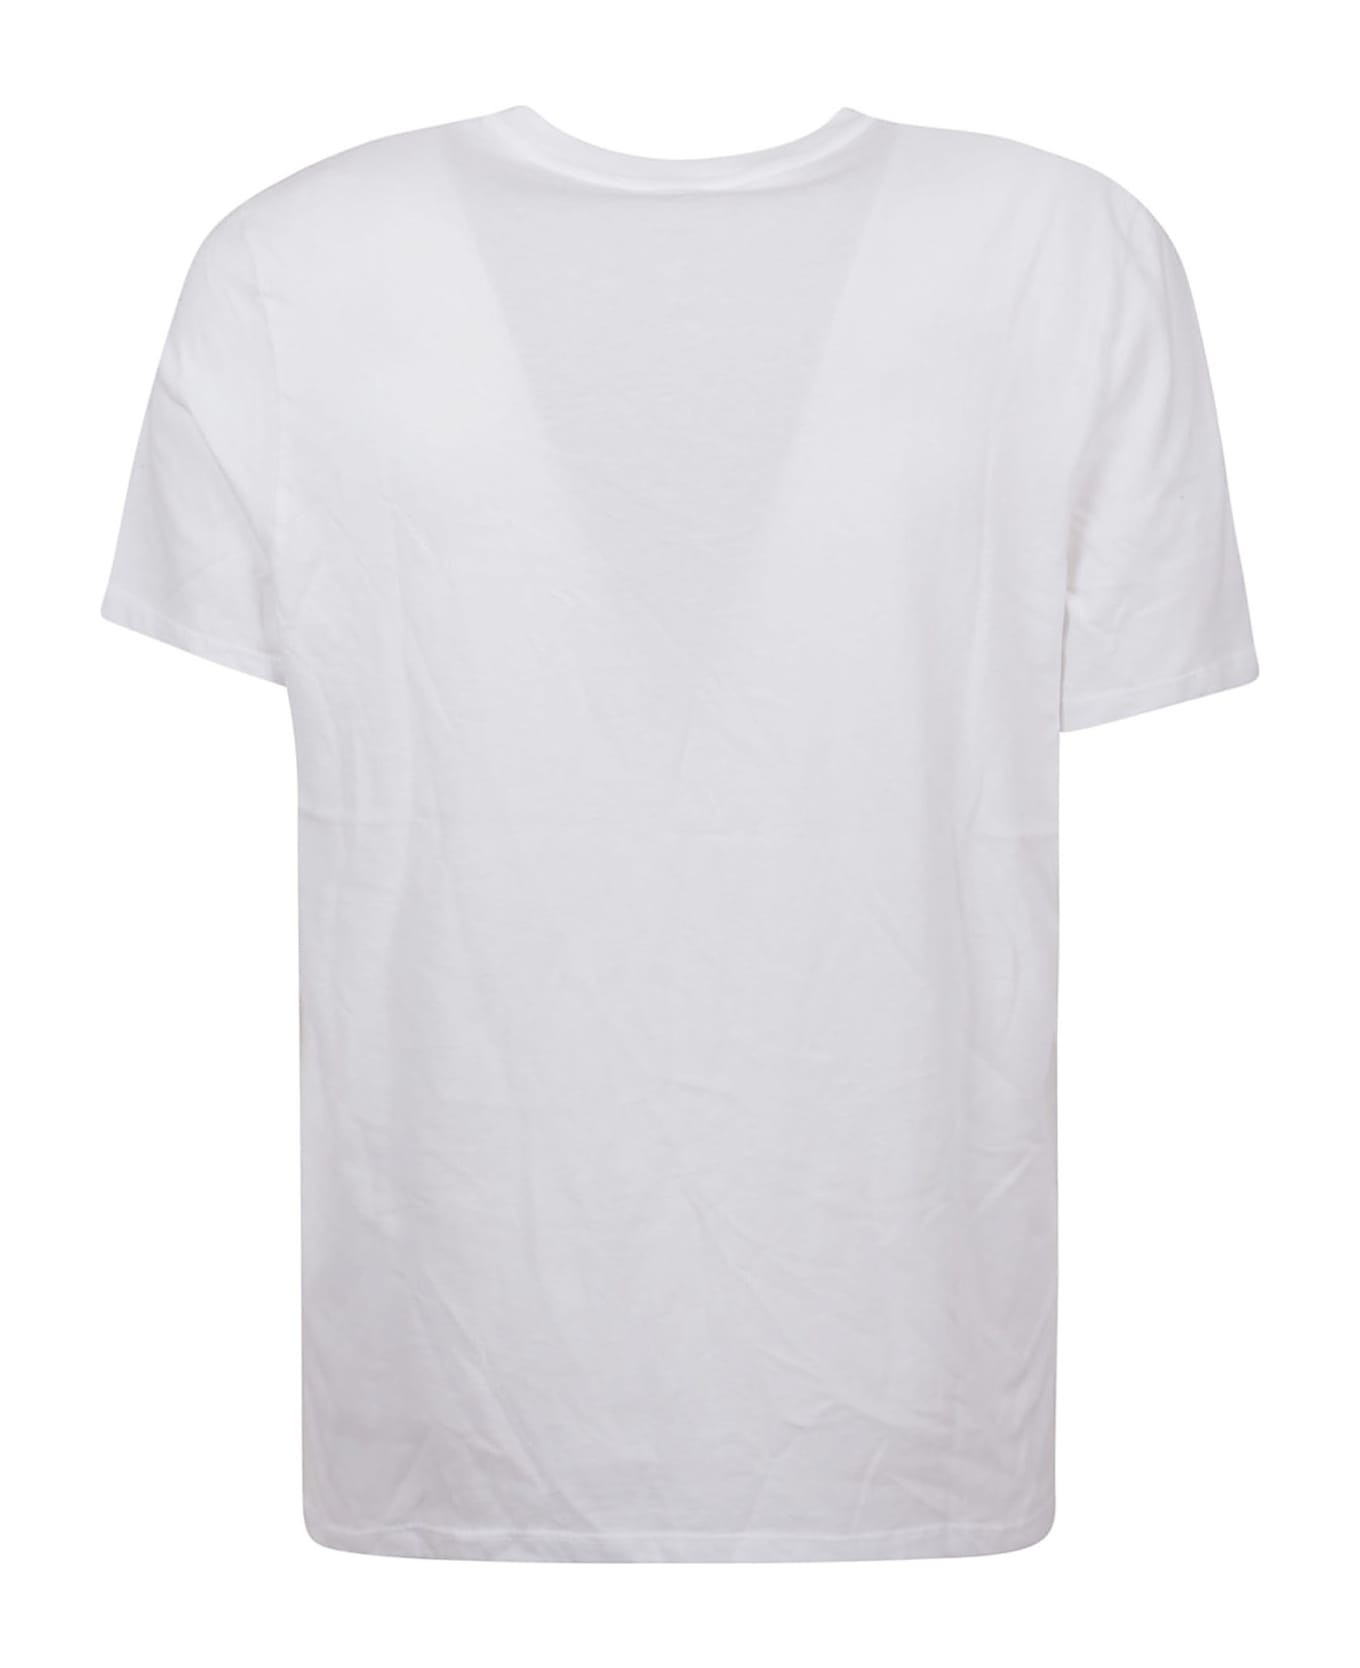 Majestic Filatures Julien - Round Neck Short Sleeve - White Tシャツ